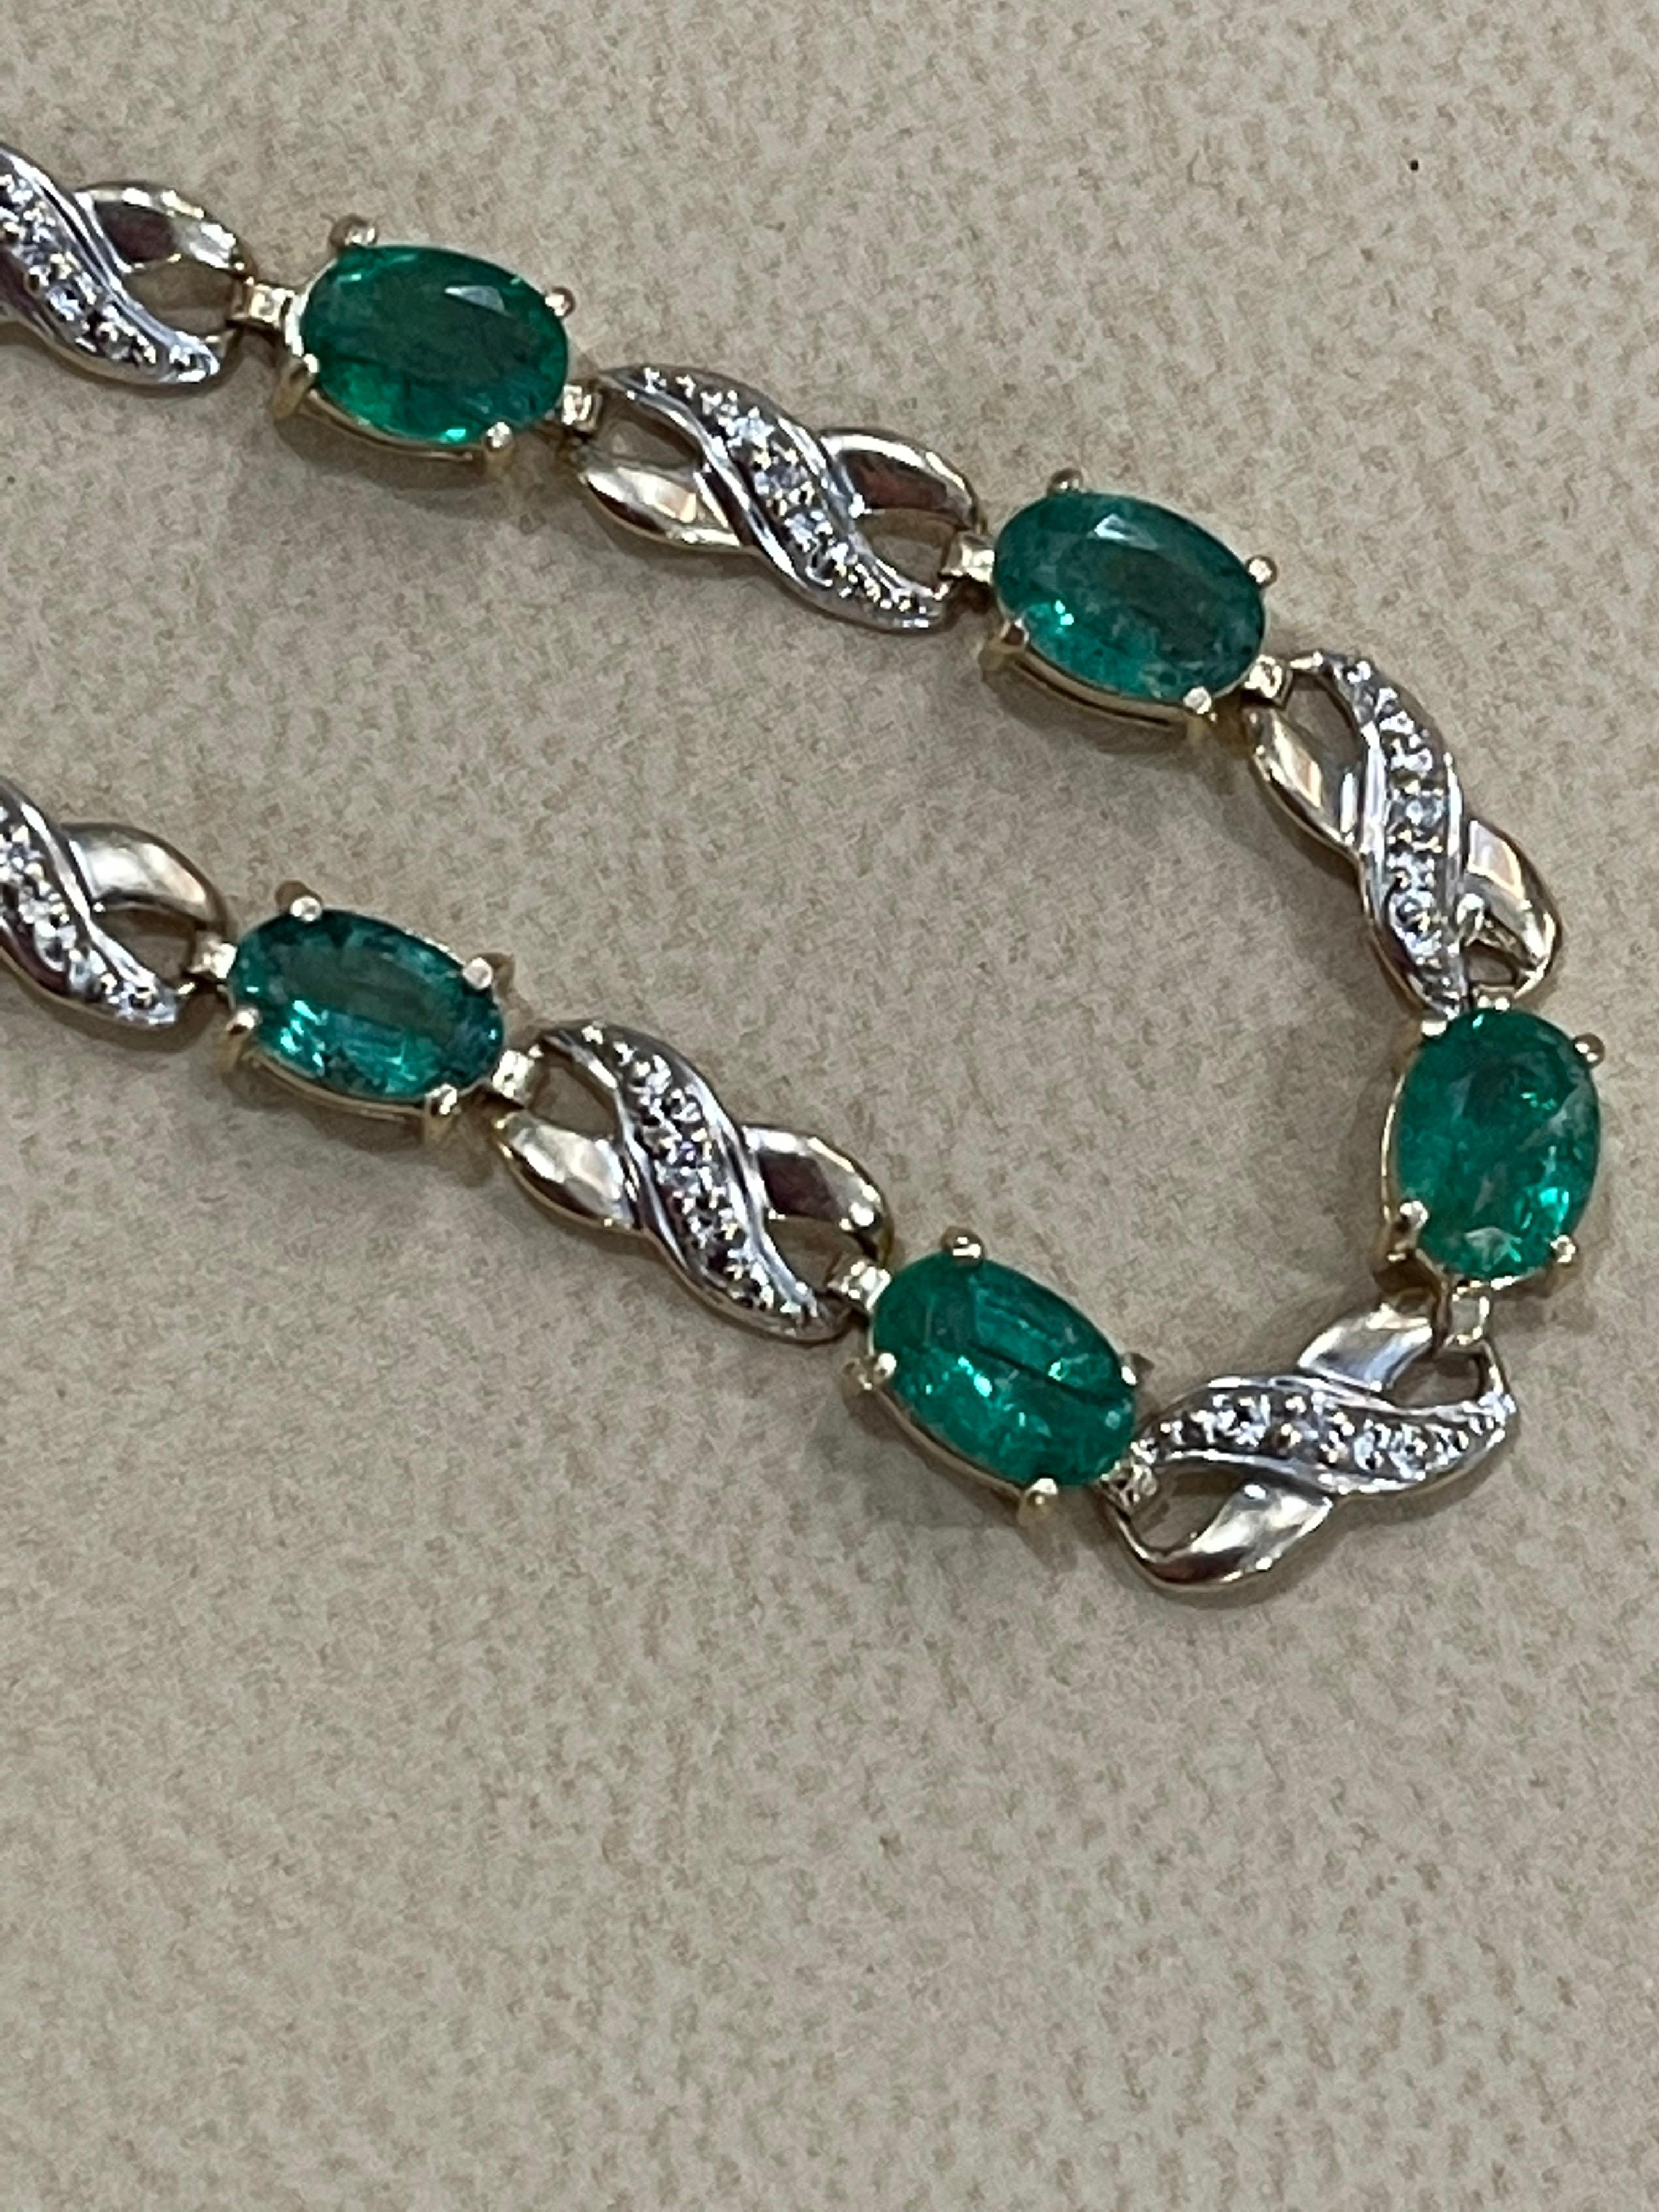 Oval Cut 2.5 Carat Emerald Tennis Bracelet 14 Karat Yellow Gold with Diamond Accent